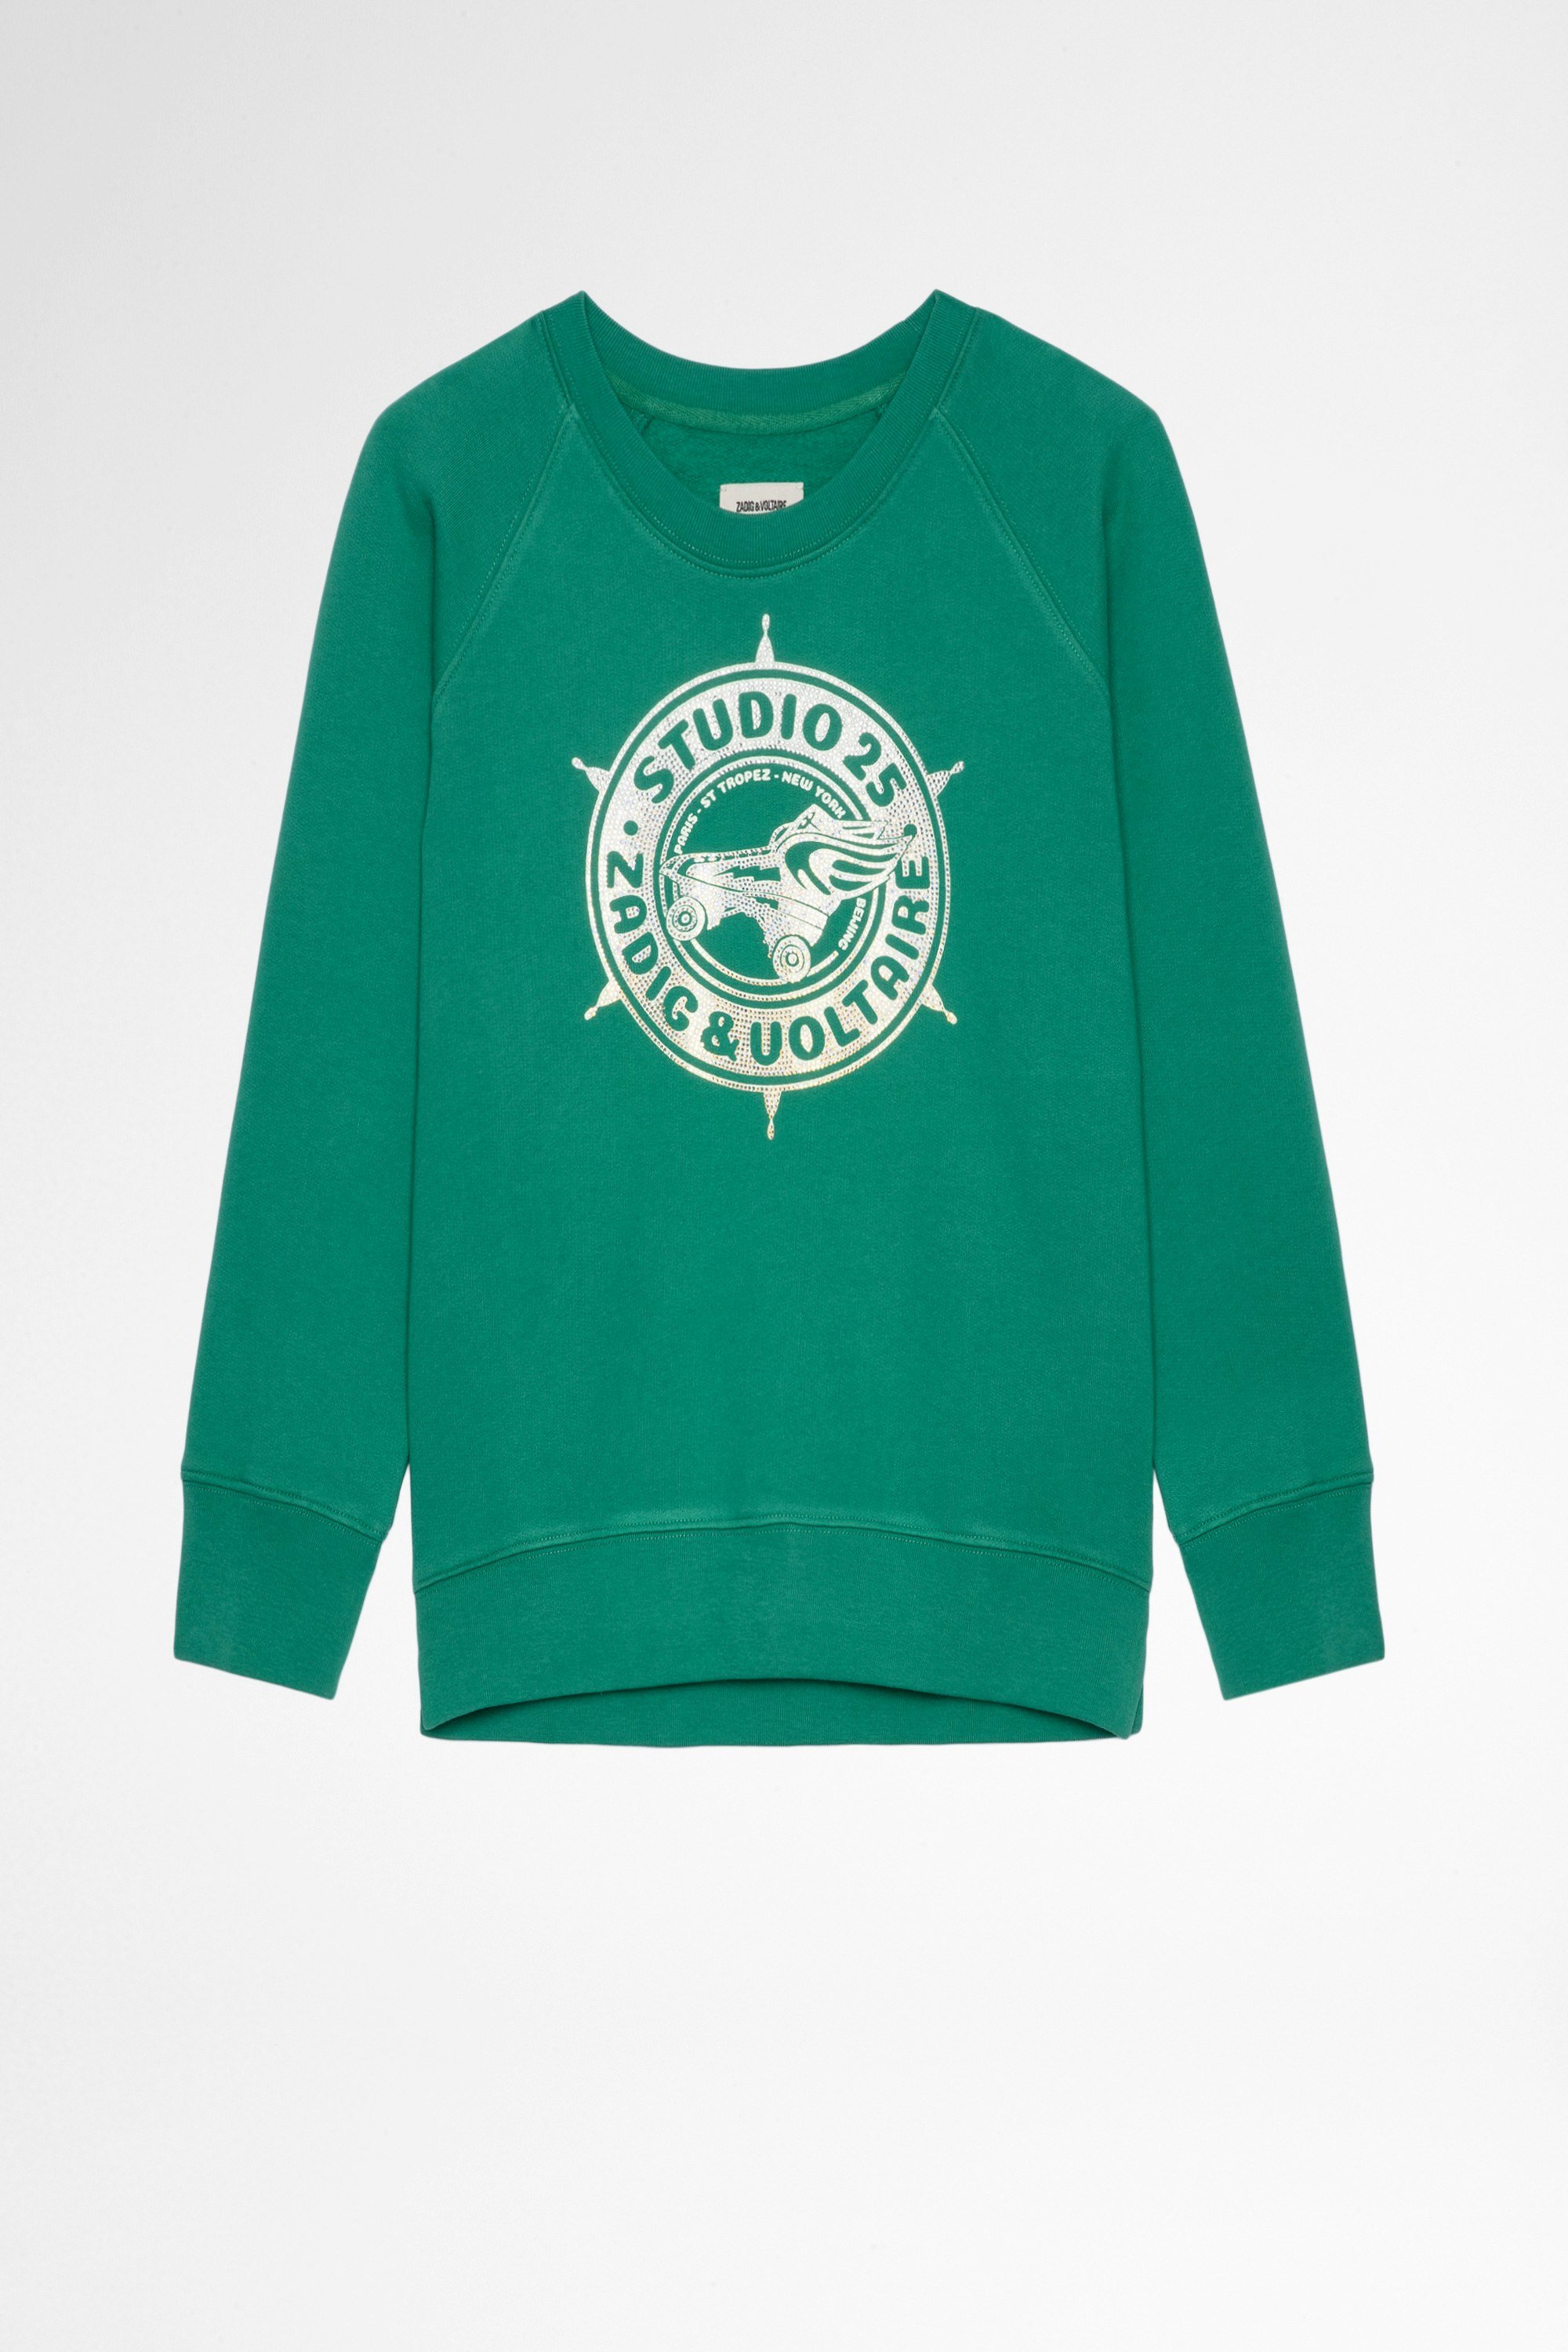 Cameron Sweatshirt Strass Women's green cotton sweatshirt with Studio 25 print and crystals